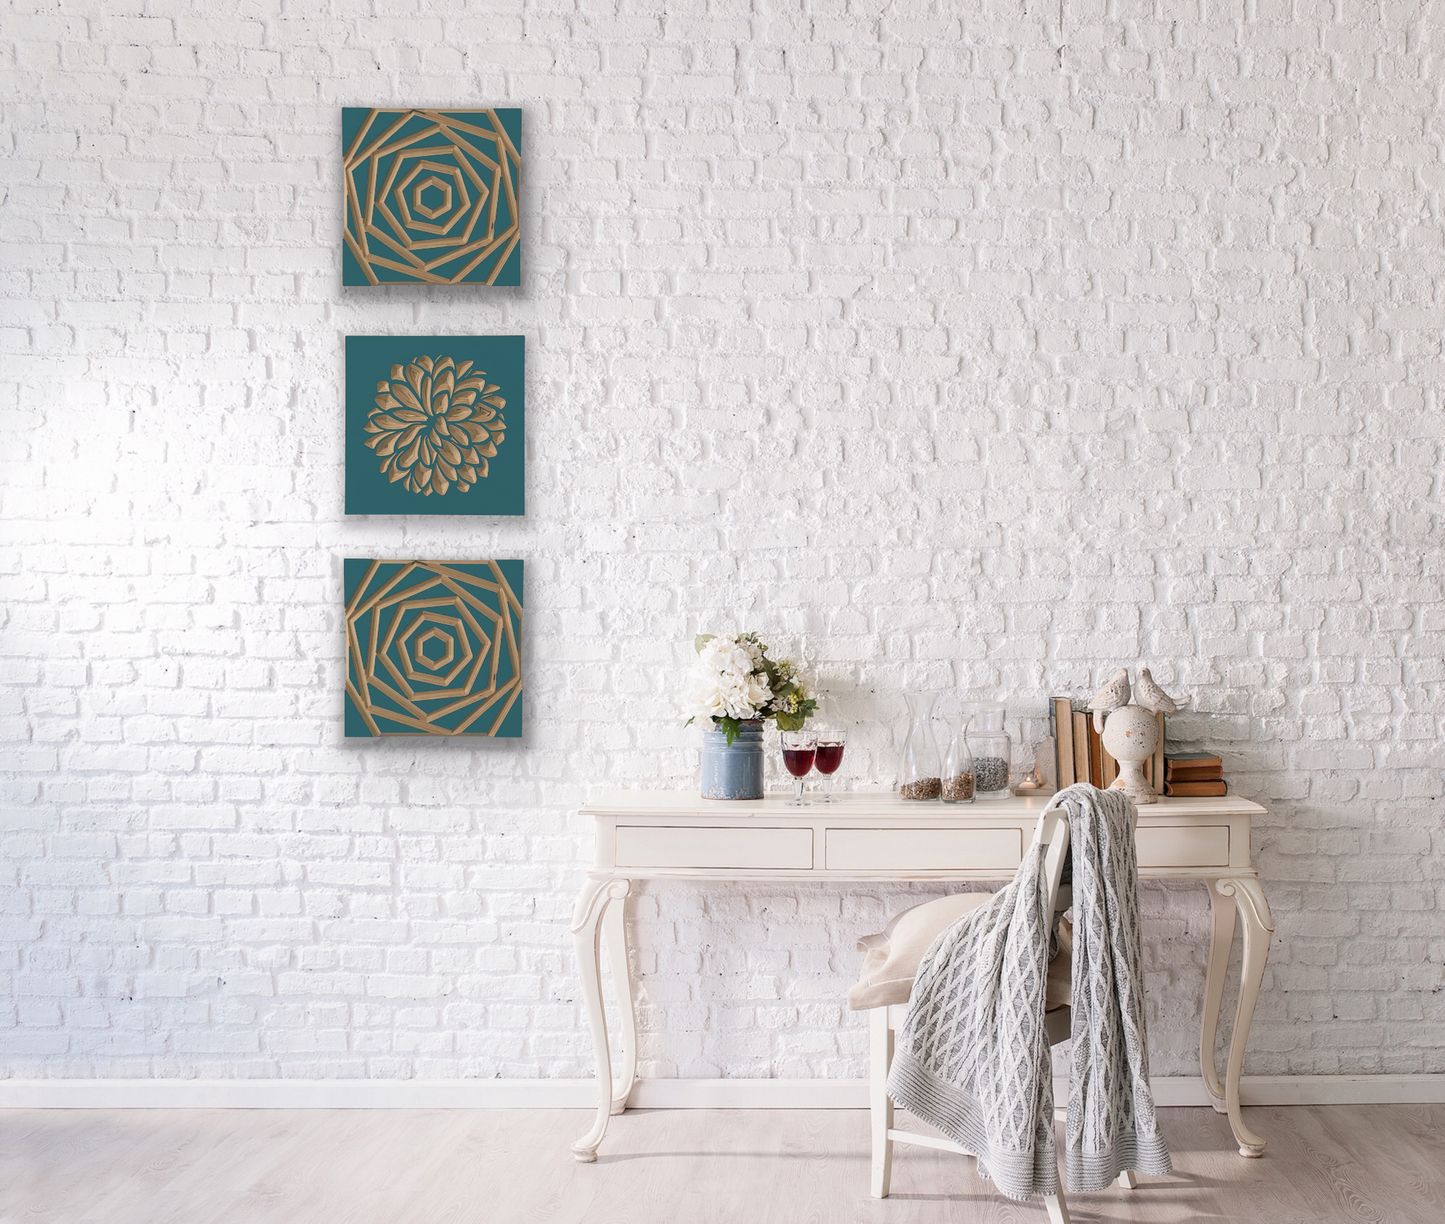 Set of 3 Wood Wall Art Panels | Dahlia & Abstract Rose | 12" x 12" Panels